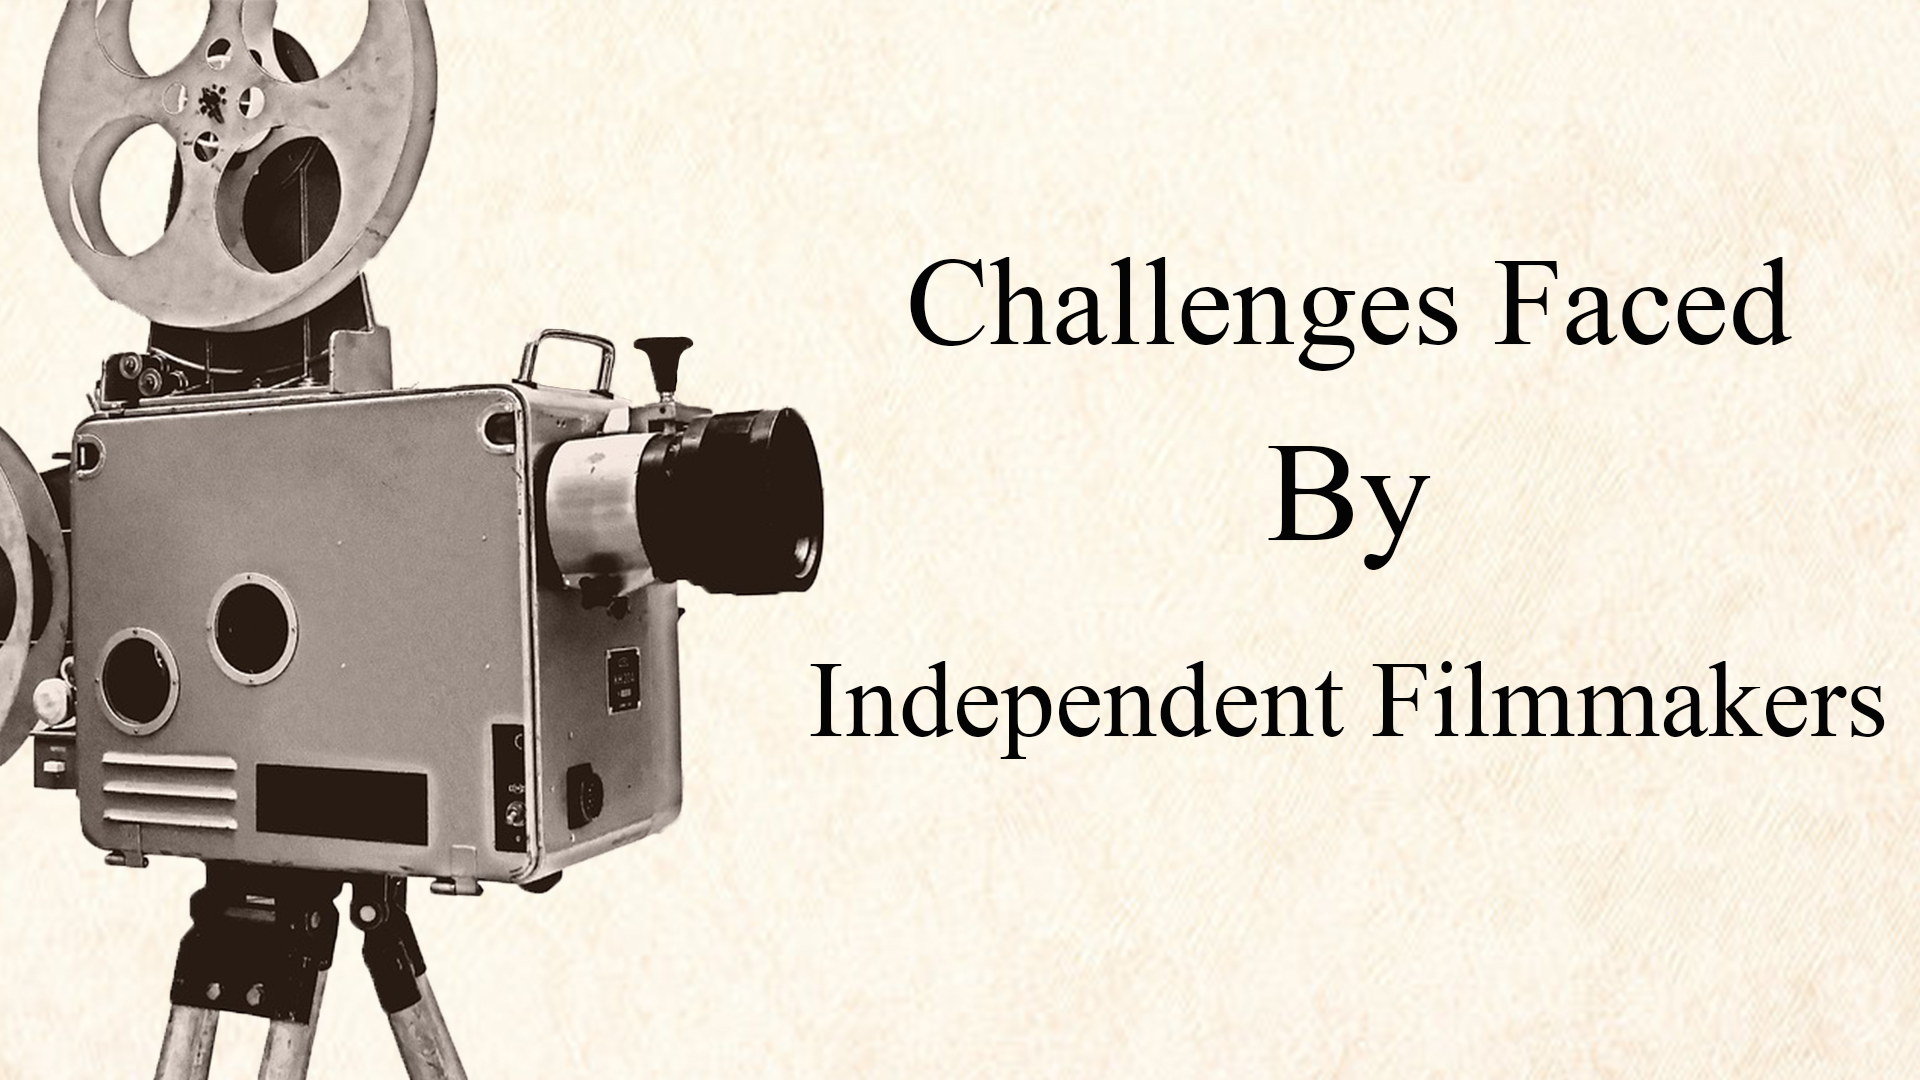 Challenges for Independent Filmmakers